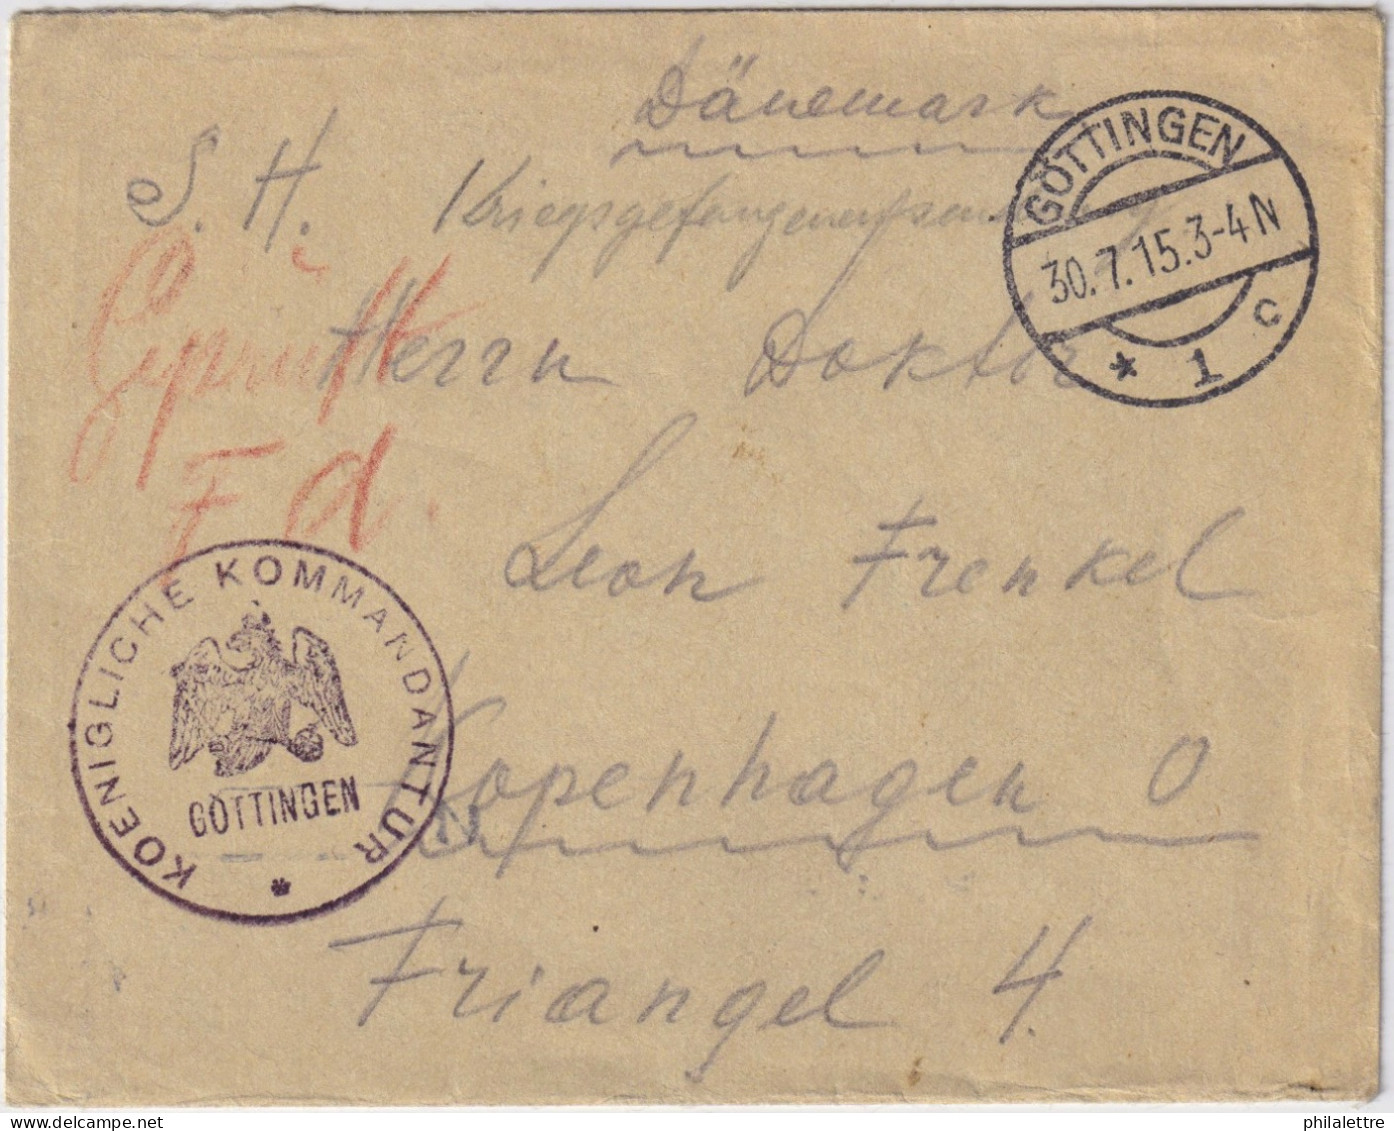 ALLEMAGNE / GERMANY - 1915 POW Cover From An NC Officer In GÖTTINGEN GFLager Addressed To COPENHAGEN, Denmark - Brieven En Documenten